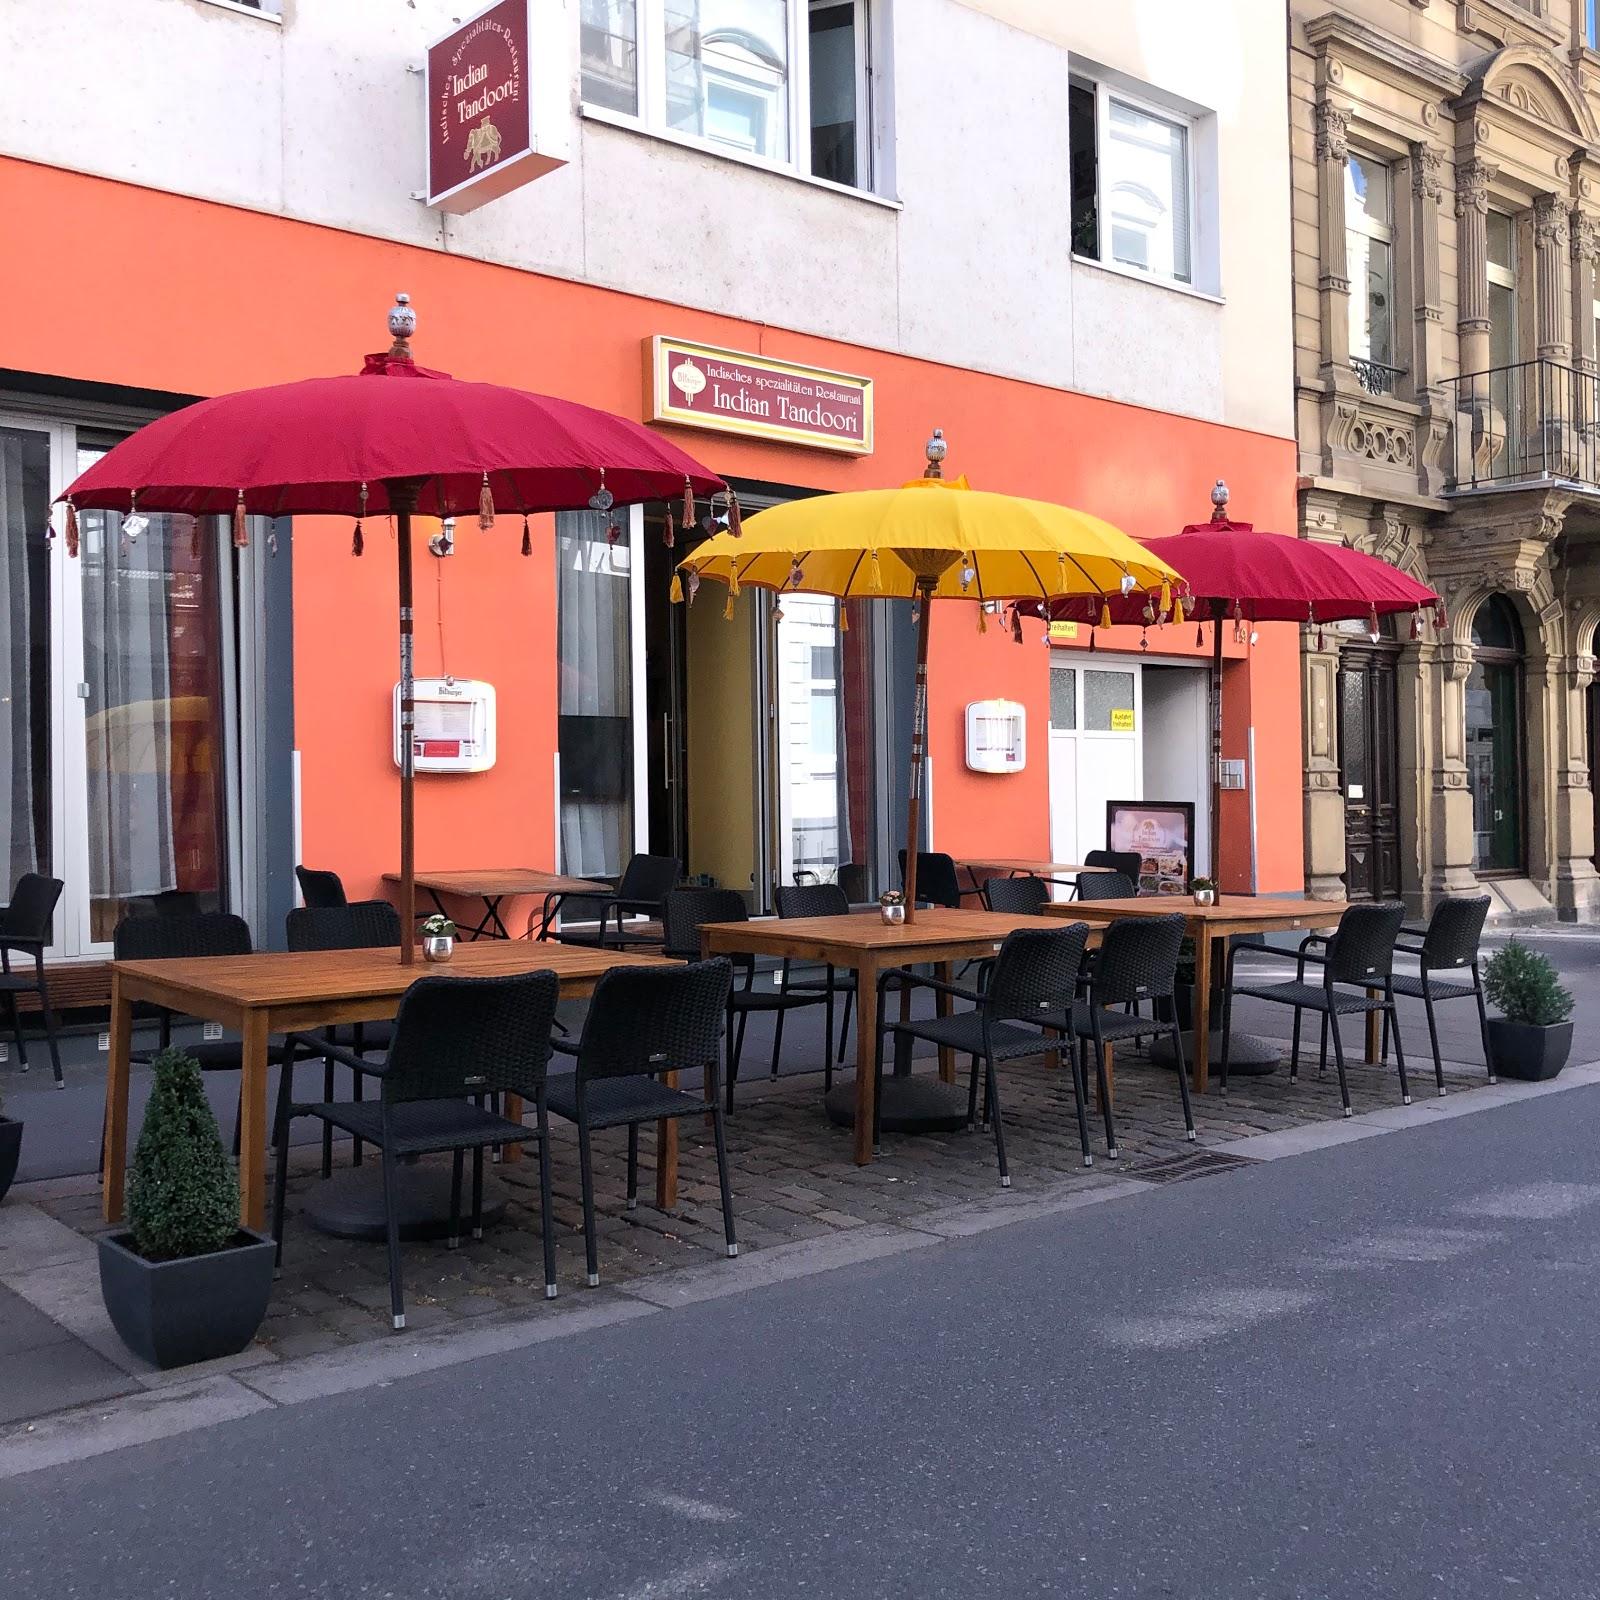 Restaurant "Indian Tandoori" in Mainz